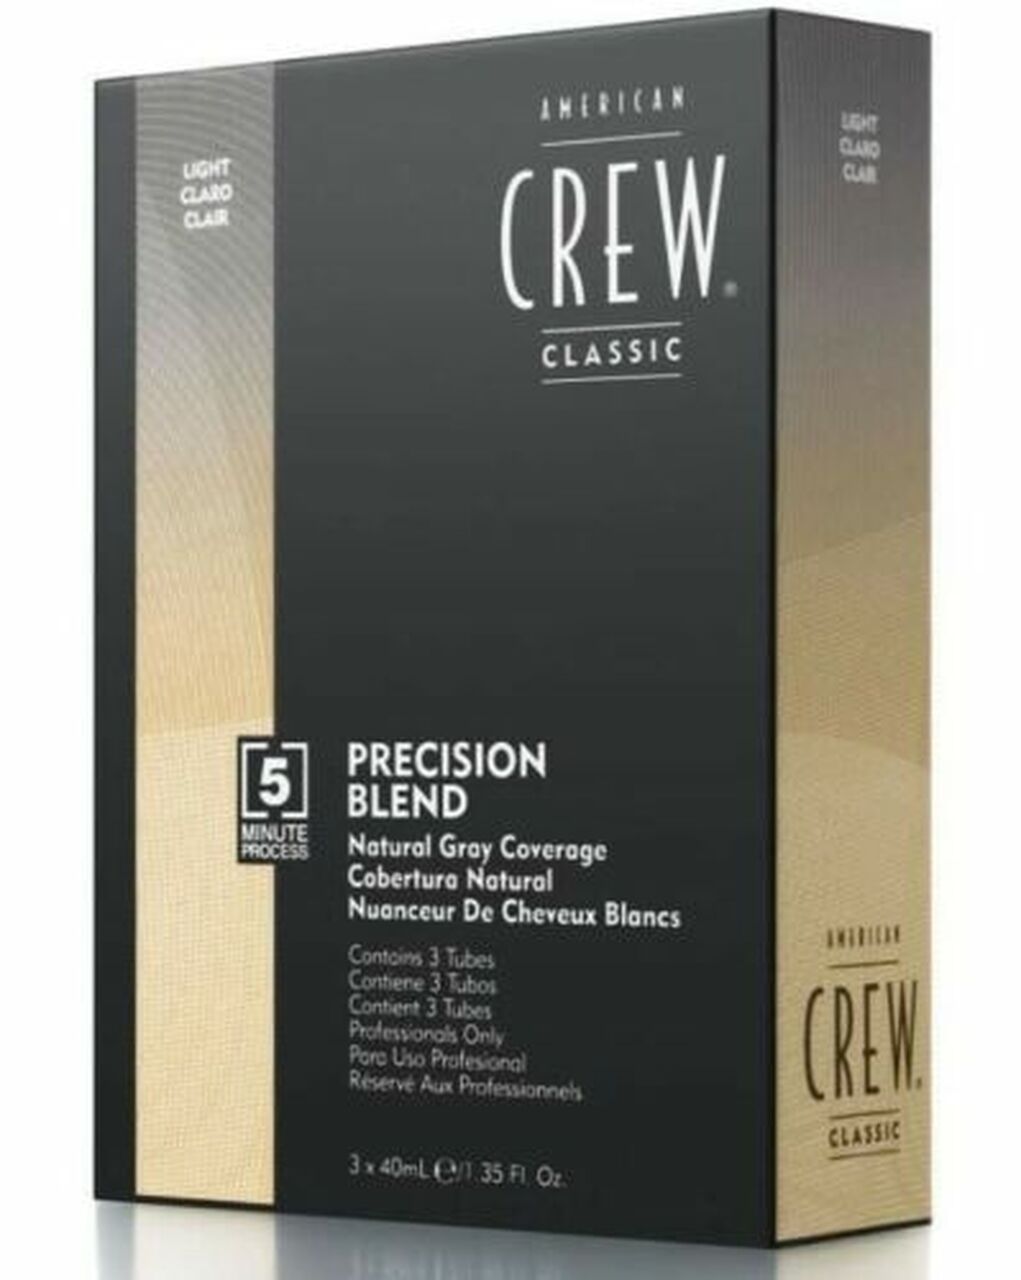 American Crew Precision Blend Light 7-8 3x40ml - Salon Warehouse